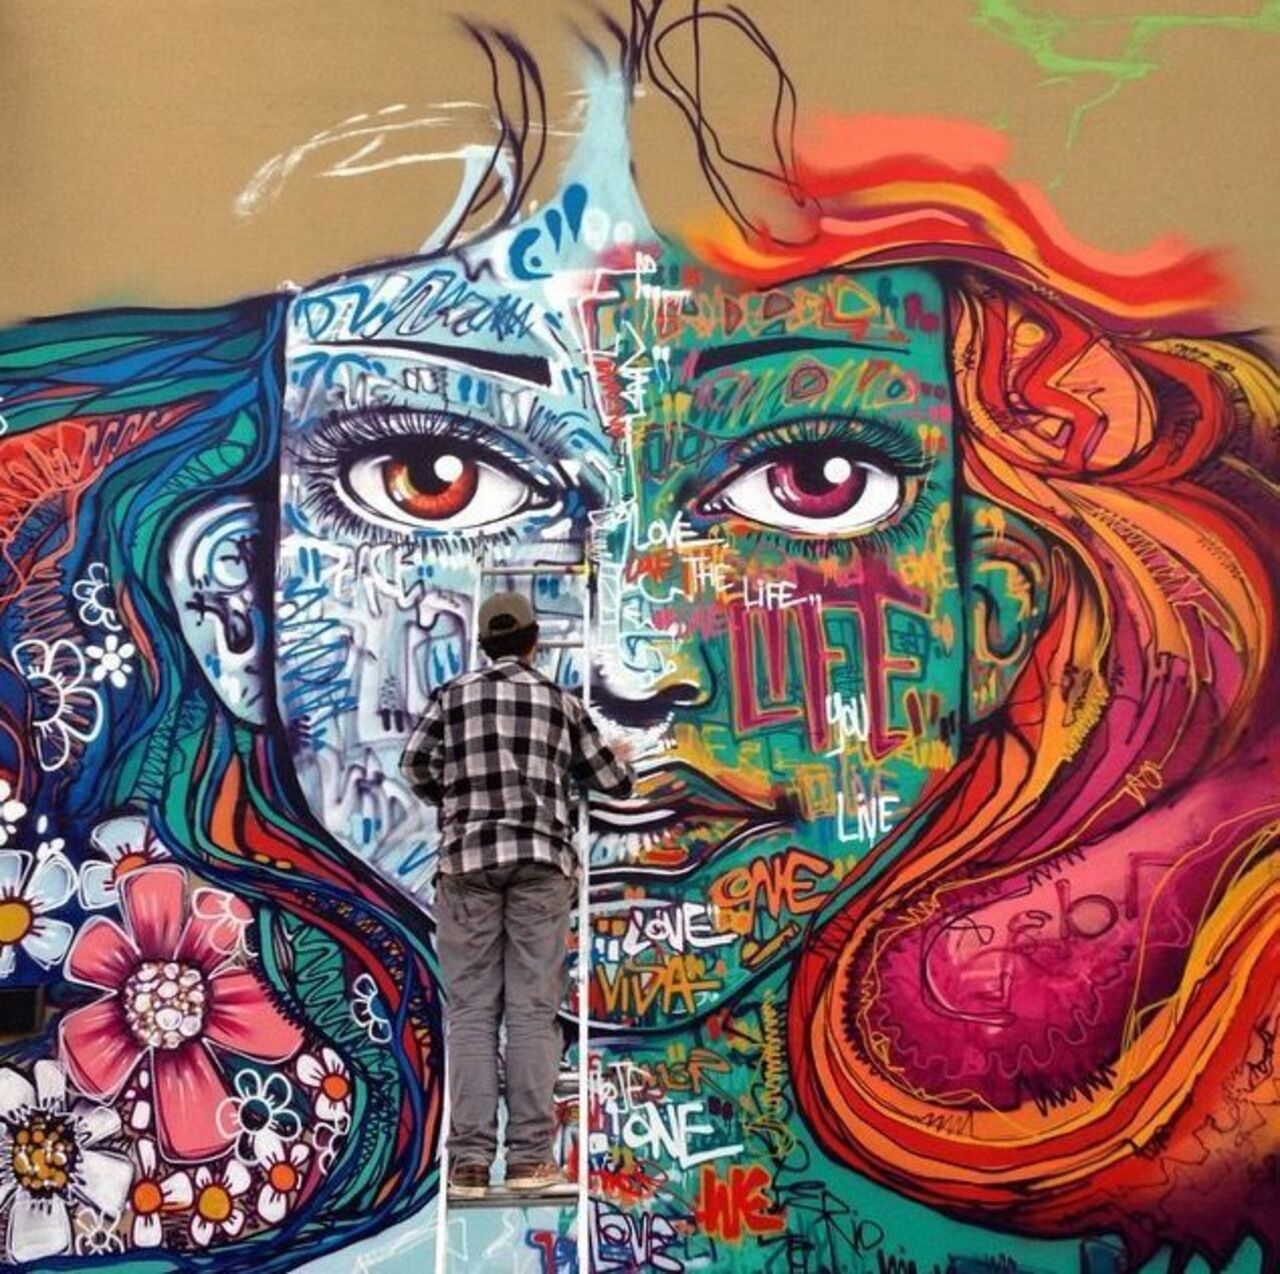 Marcelo Ment at work, Miami #streetart #mural #graffiti #art https://t.co/5qG7ZzdQ1N